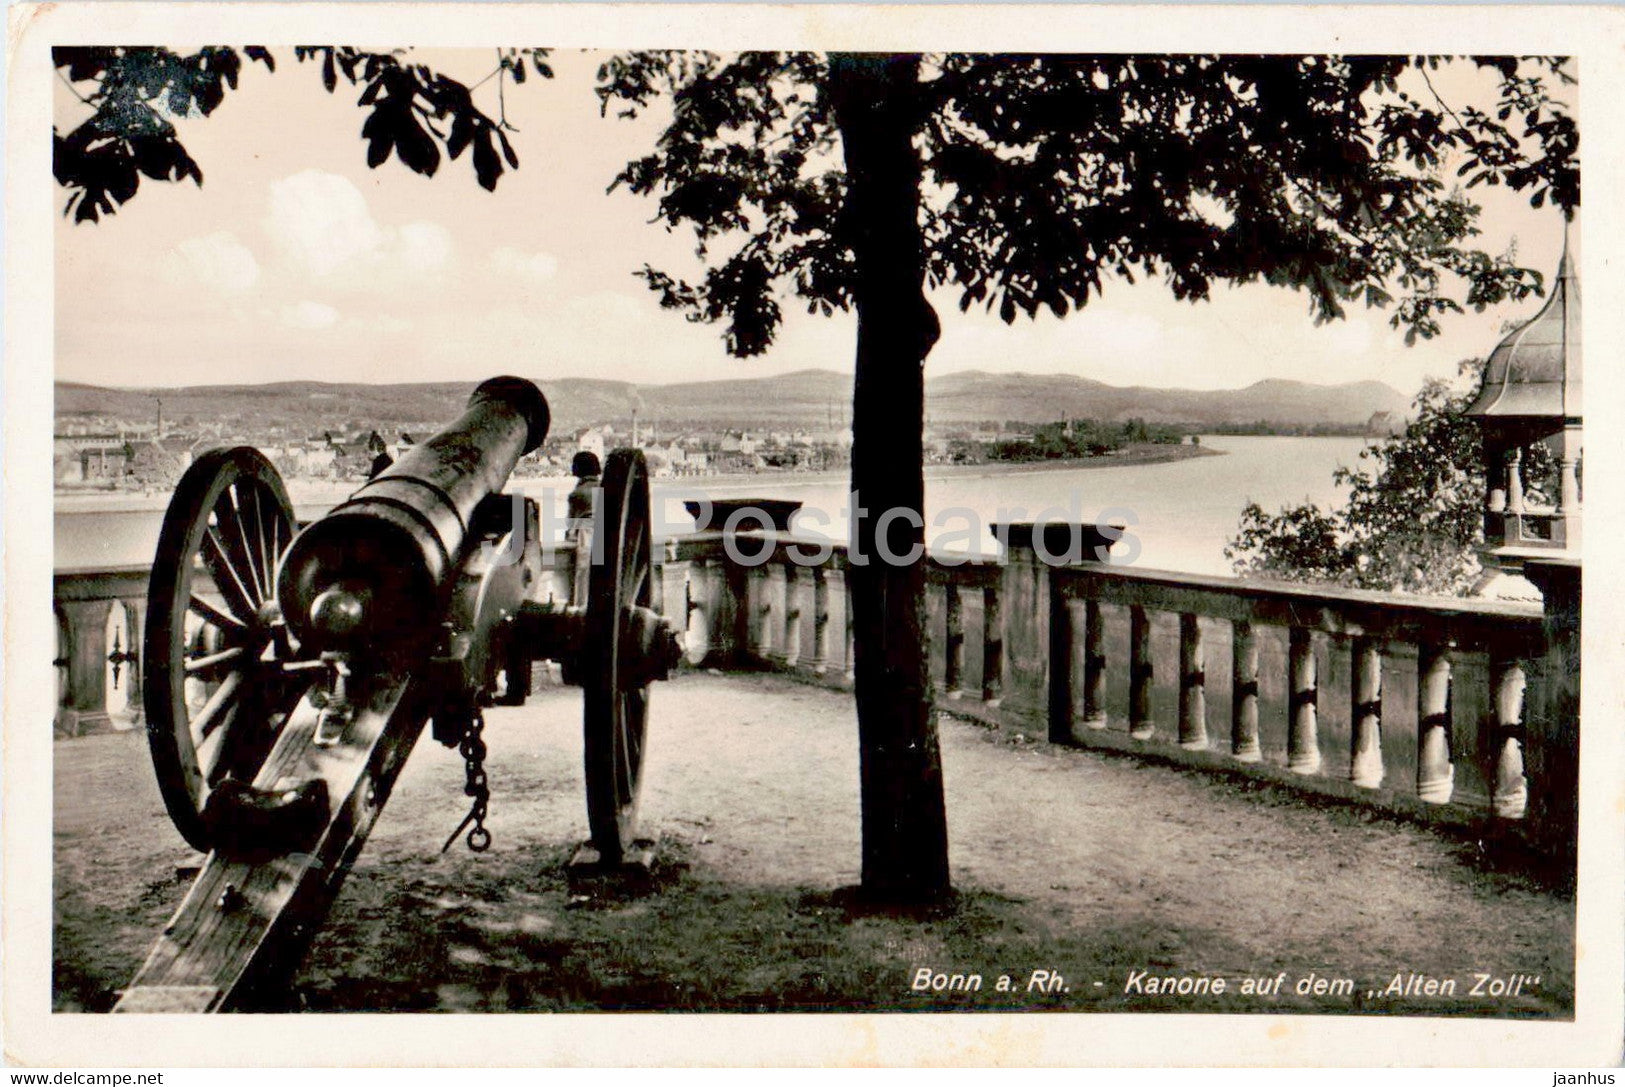 Bonn a Rh - Kanone auf dem Alten Zoll - cannon - military - old postcard - Germany - unused - JH Postcards